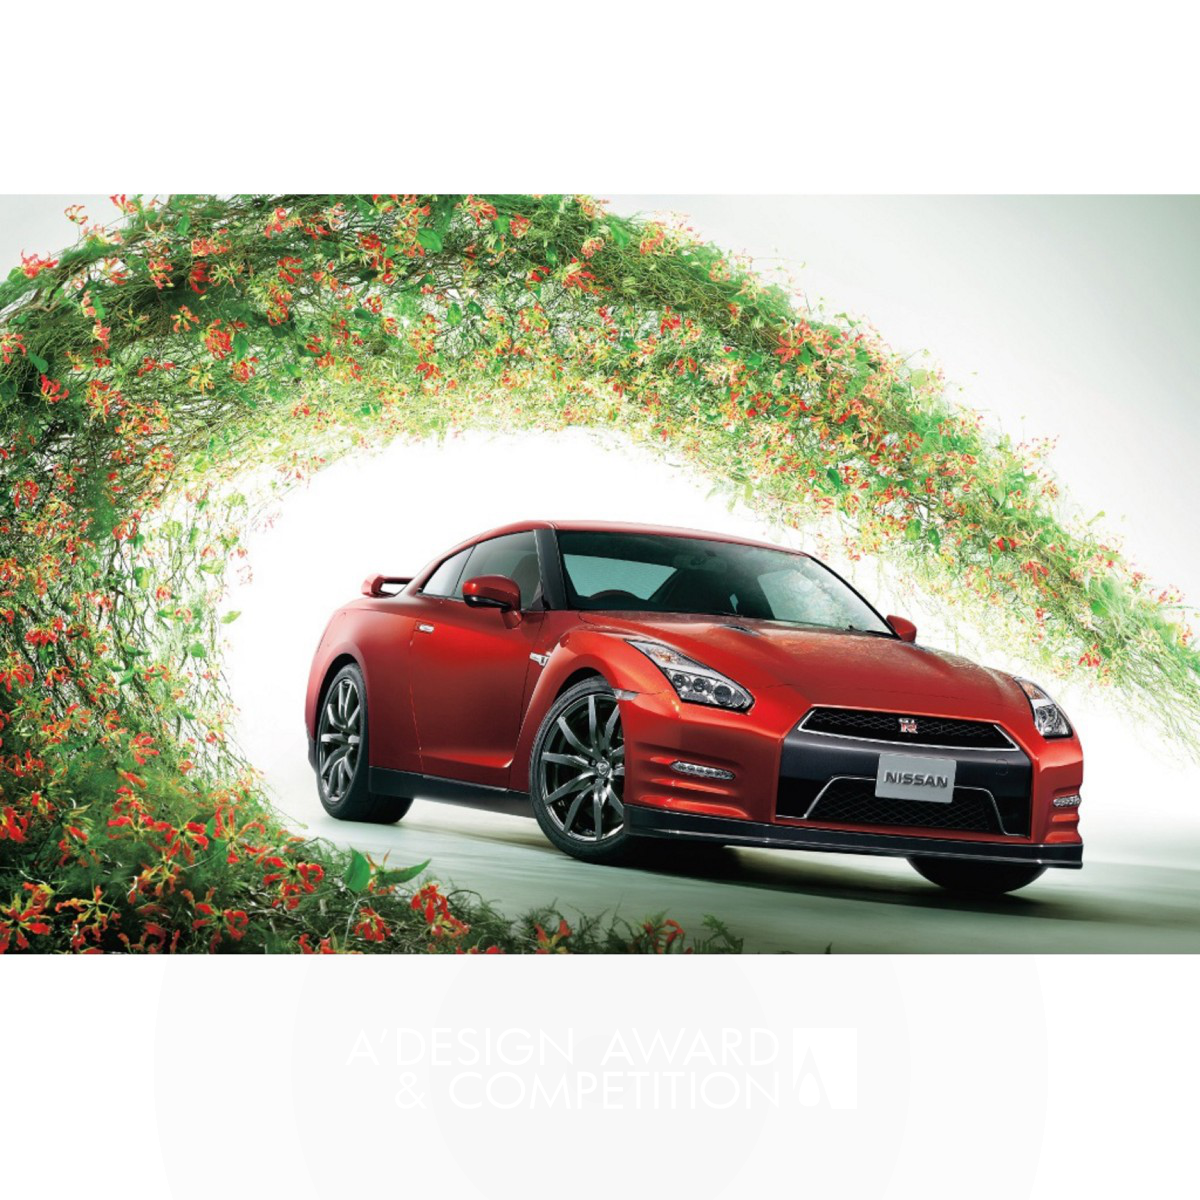 Nissan Calendar 2014 Calendar by E-graphics communications